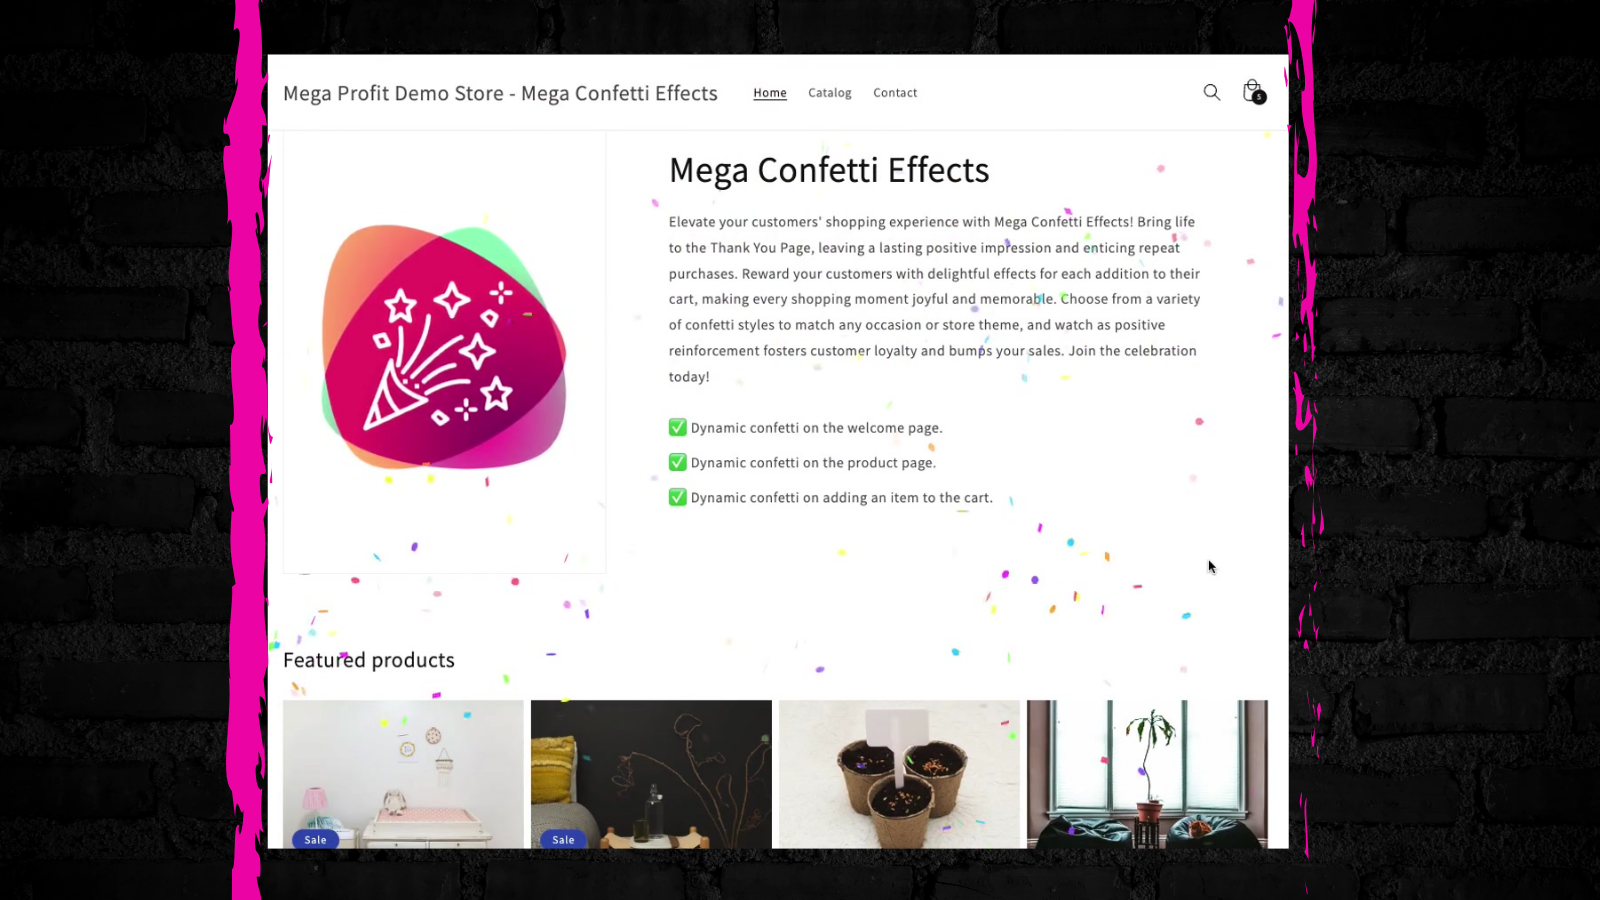 Mega Confetti Effects - Enhance customer engagement